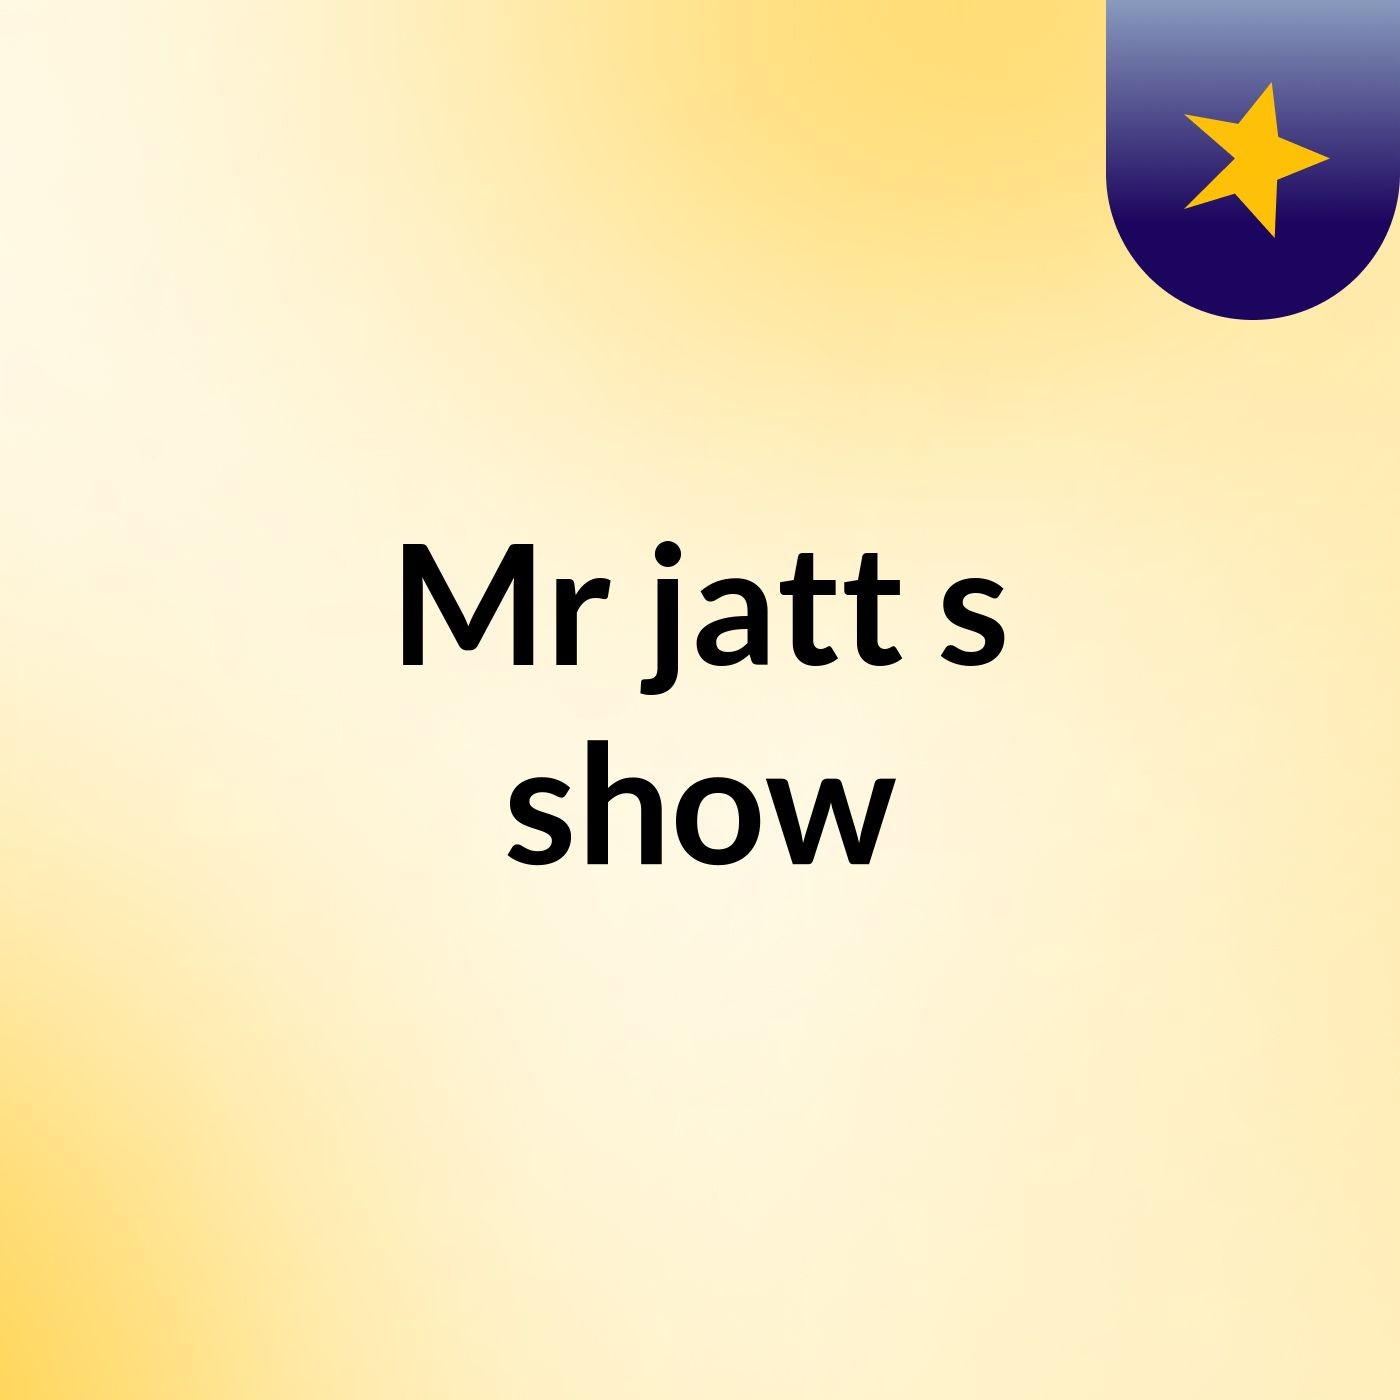 Mr jatt's show